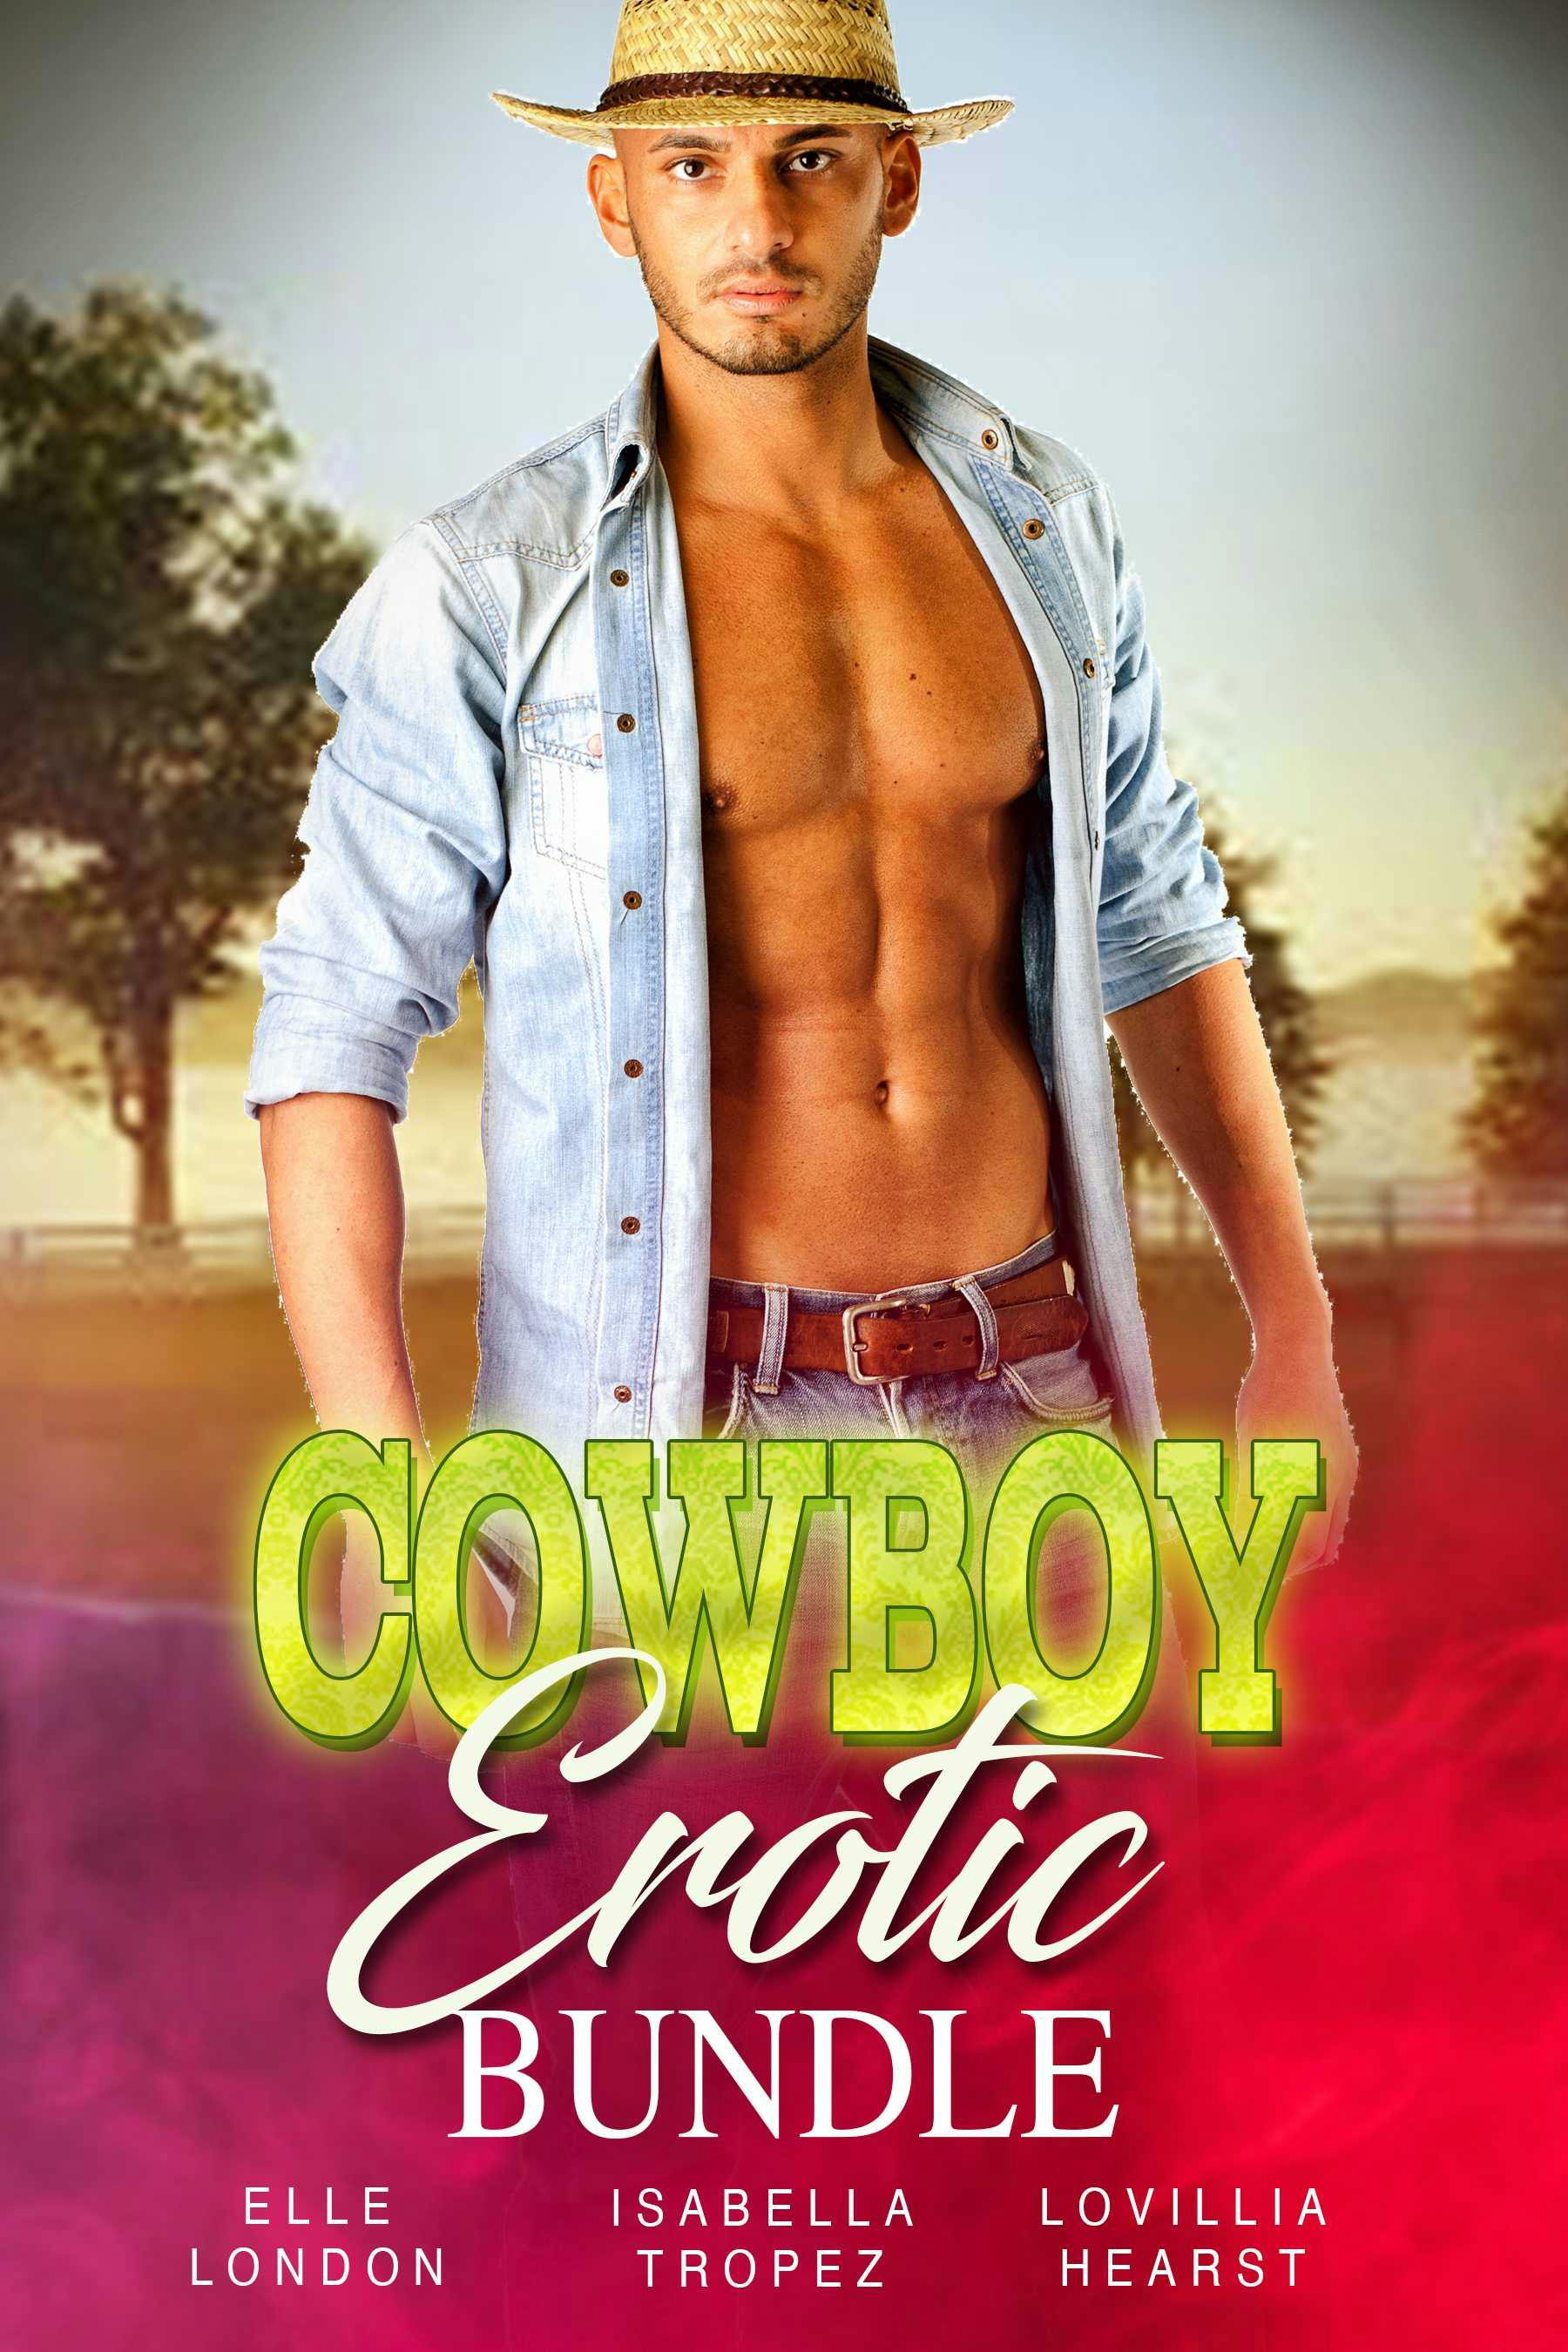 Cowboy Erotic Bundle - Elle London, Isabella Tropez, Lovillia Hearst